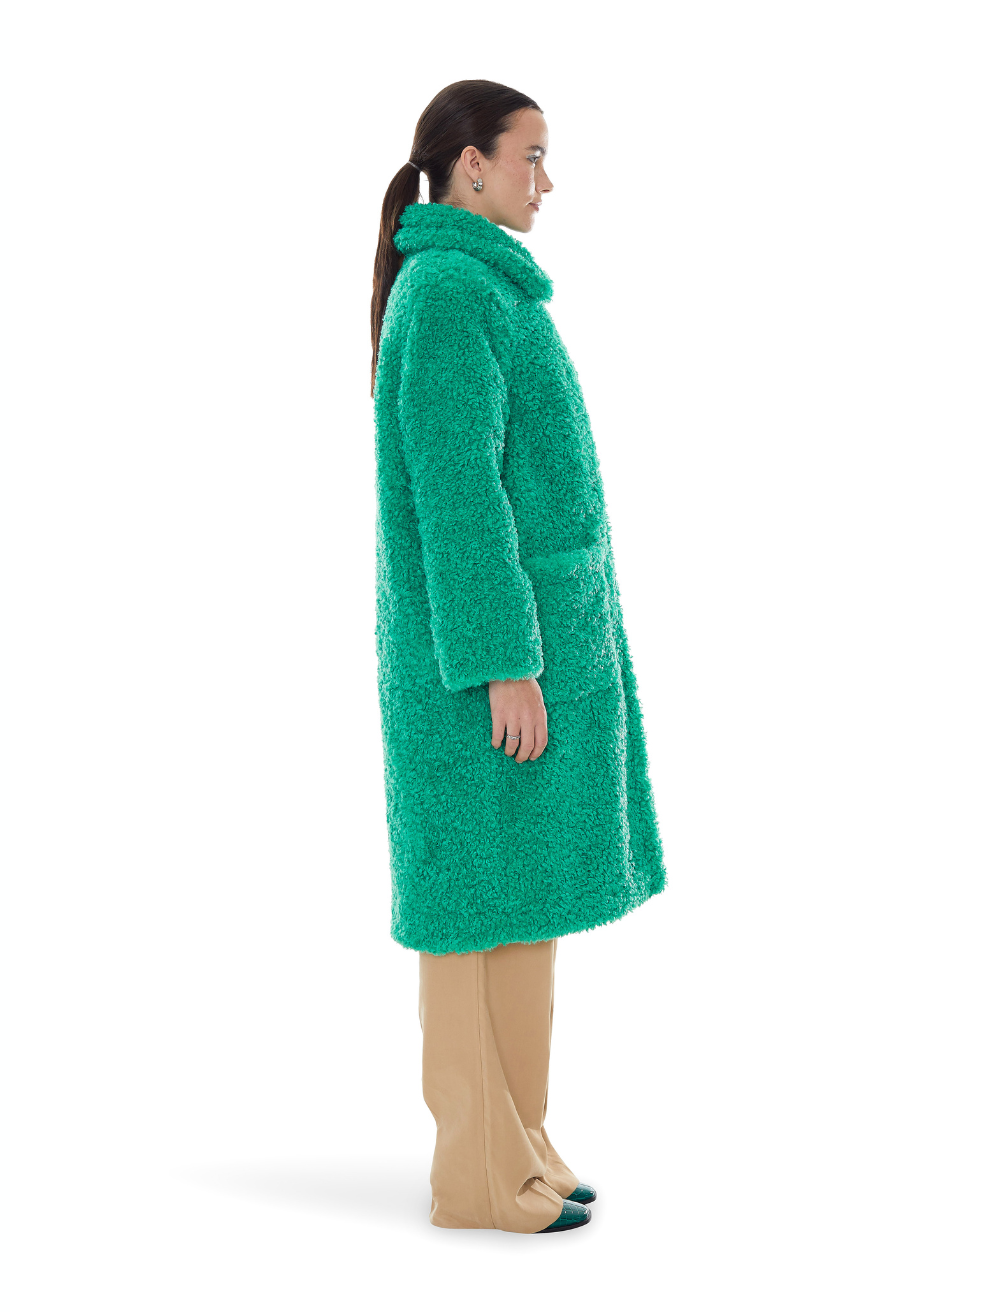 Ruby Shamrock Green Slow Fashion Outerwear Canada Long Teddy Coat Faux Sherpa